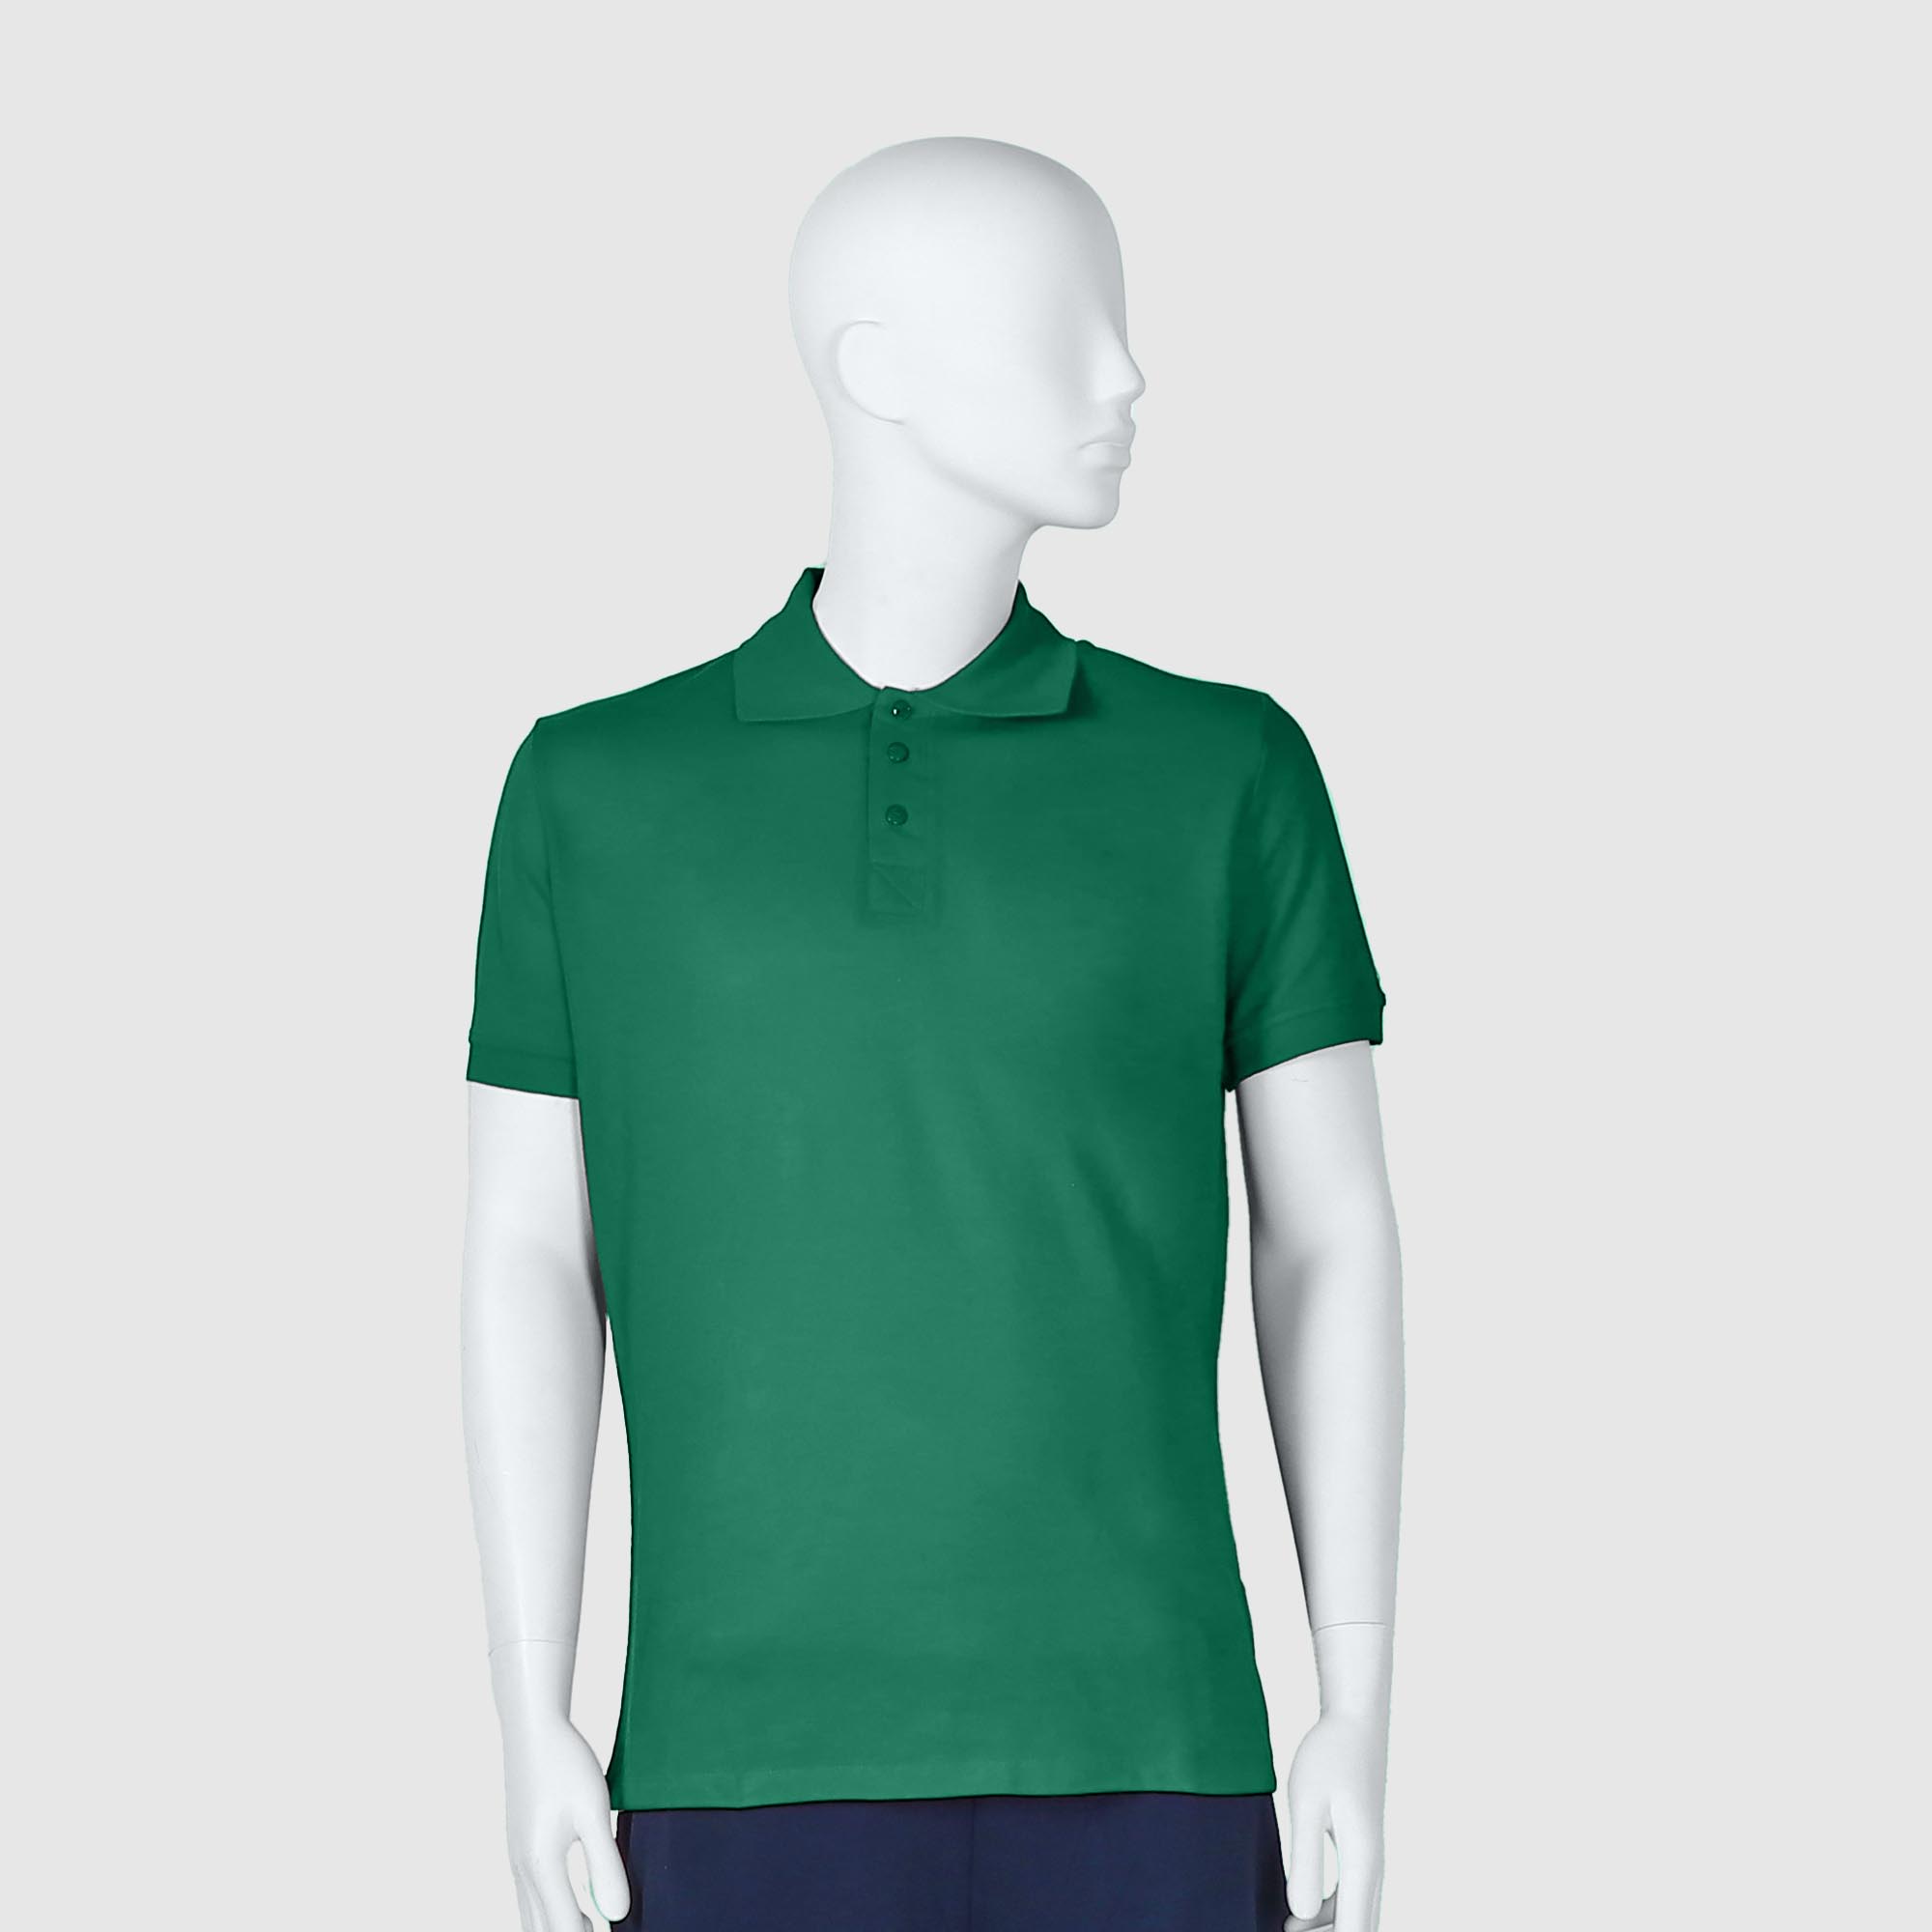 Мужская футболка-поло Diva Teks зелёная (DTD-09), цвет зелёный, размер 54-56 - фото 1